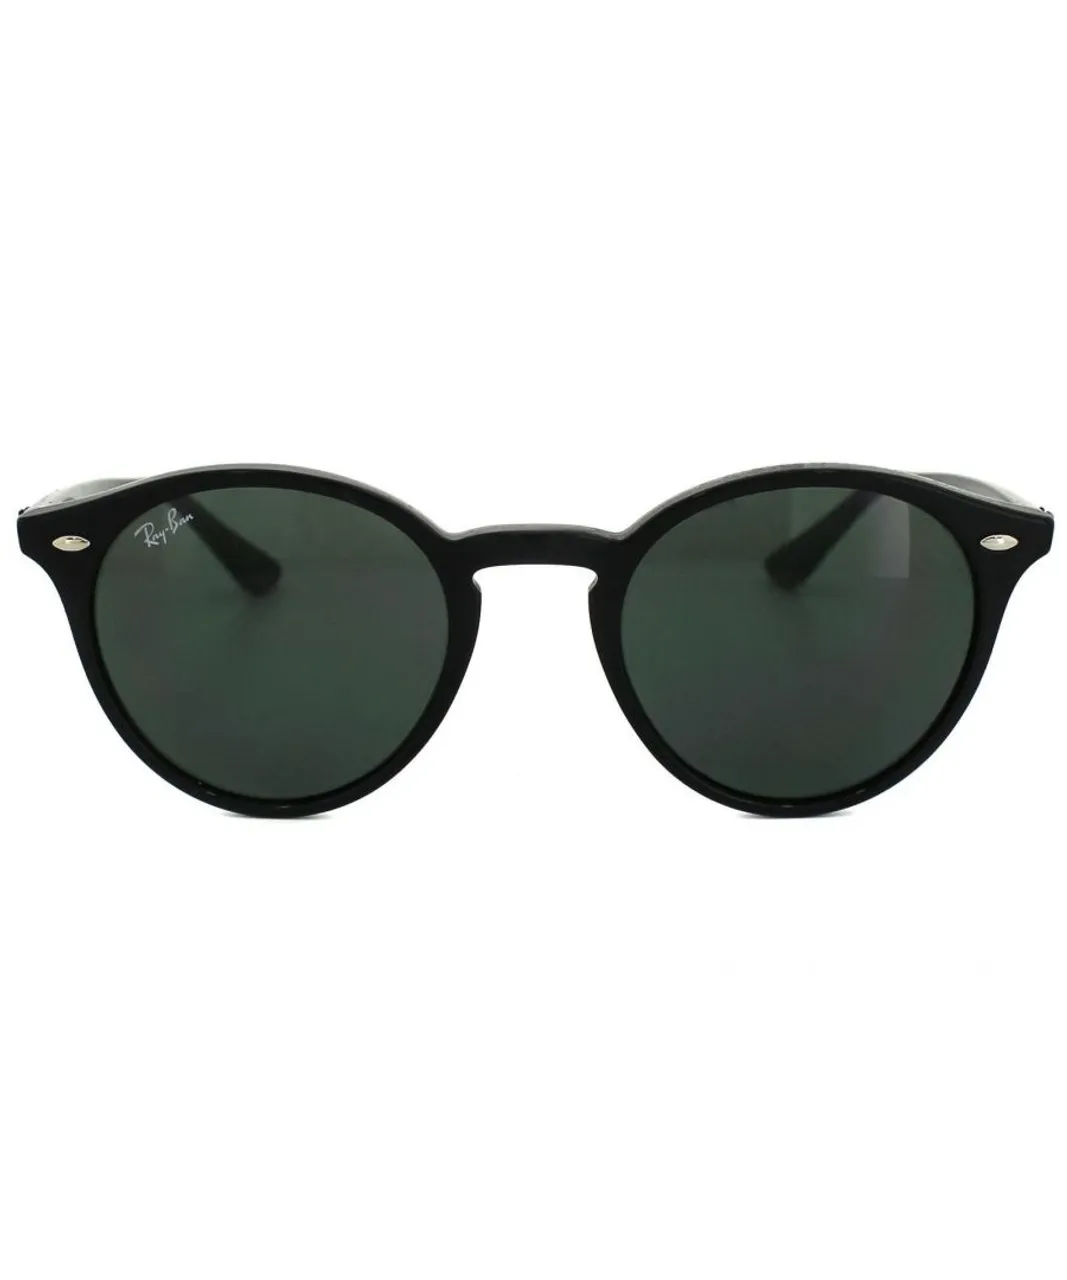 Ray-Ban Unisex Sunglasses 2180 601/71 Black Green - One